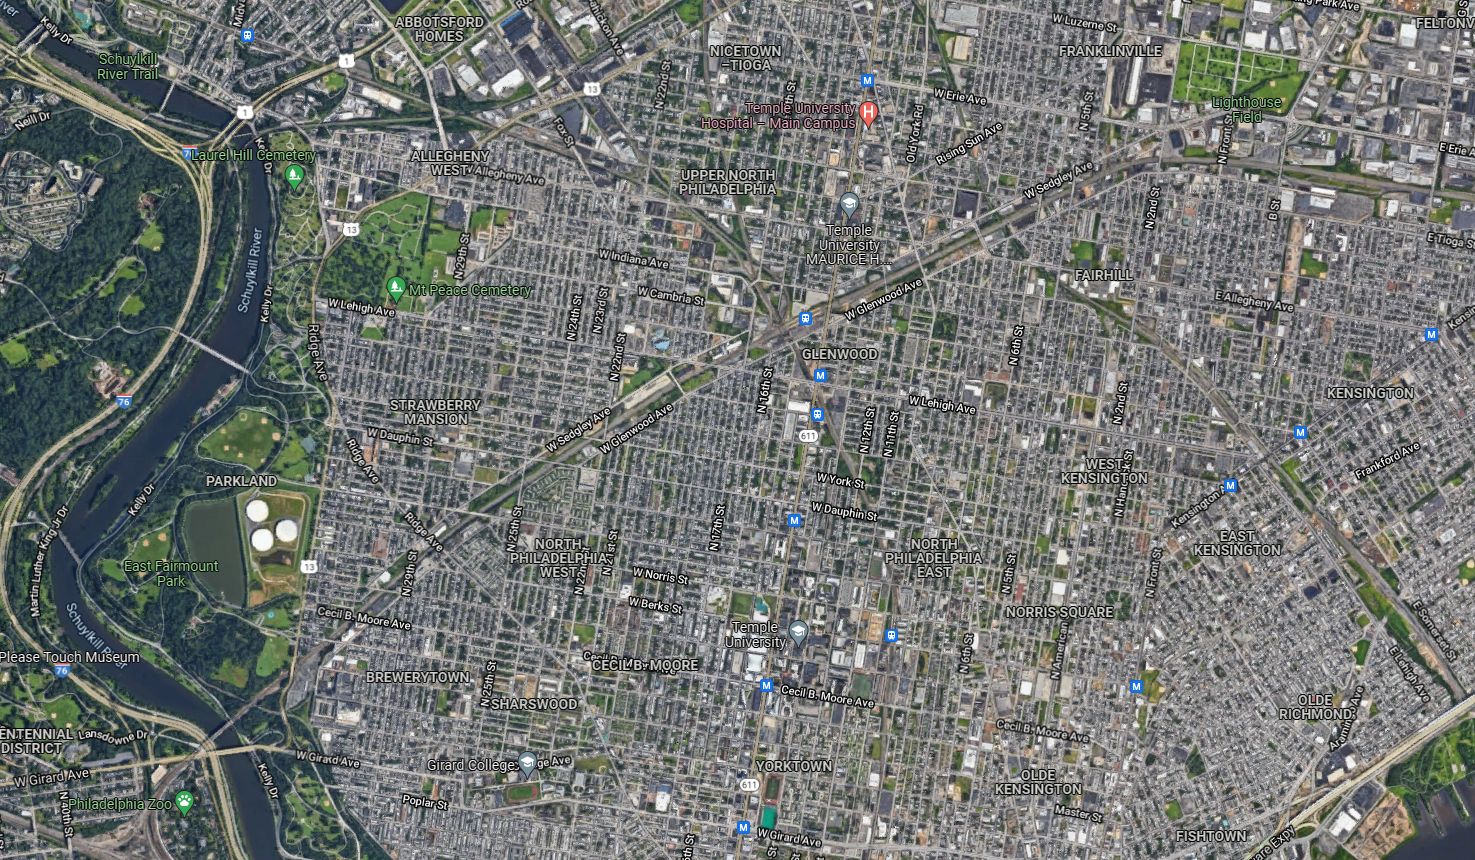 North Central Philadelphia. Credit: Google Maps